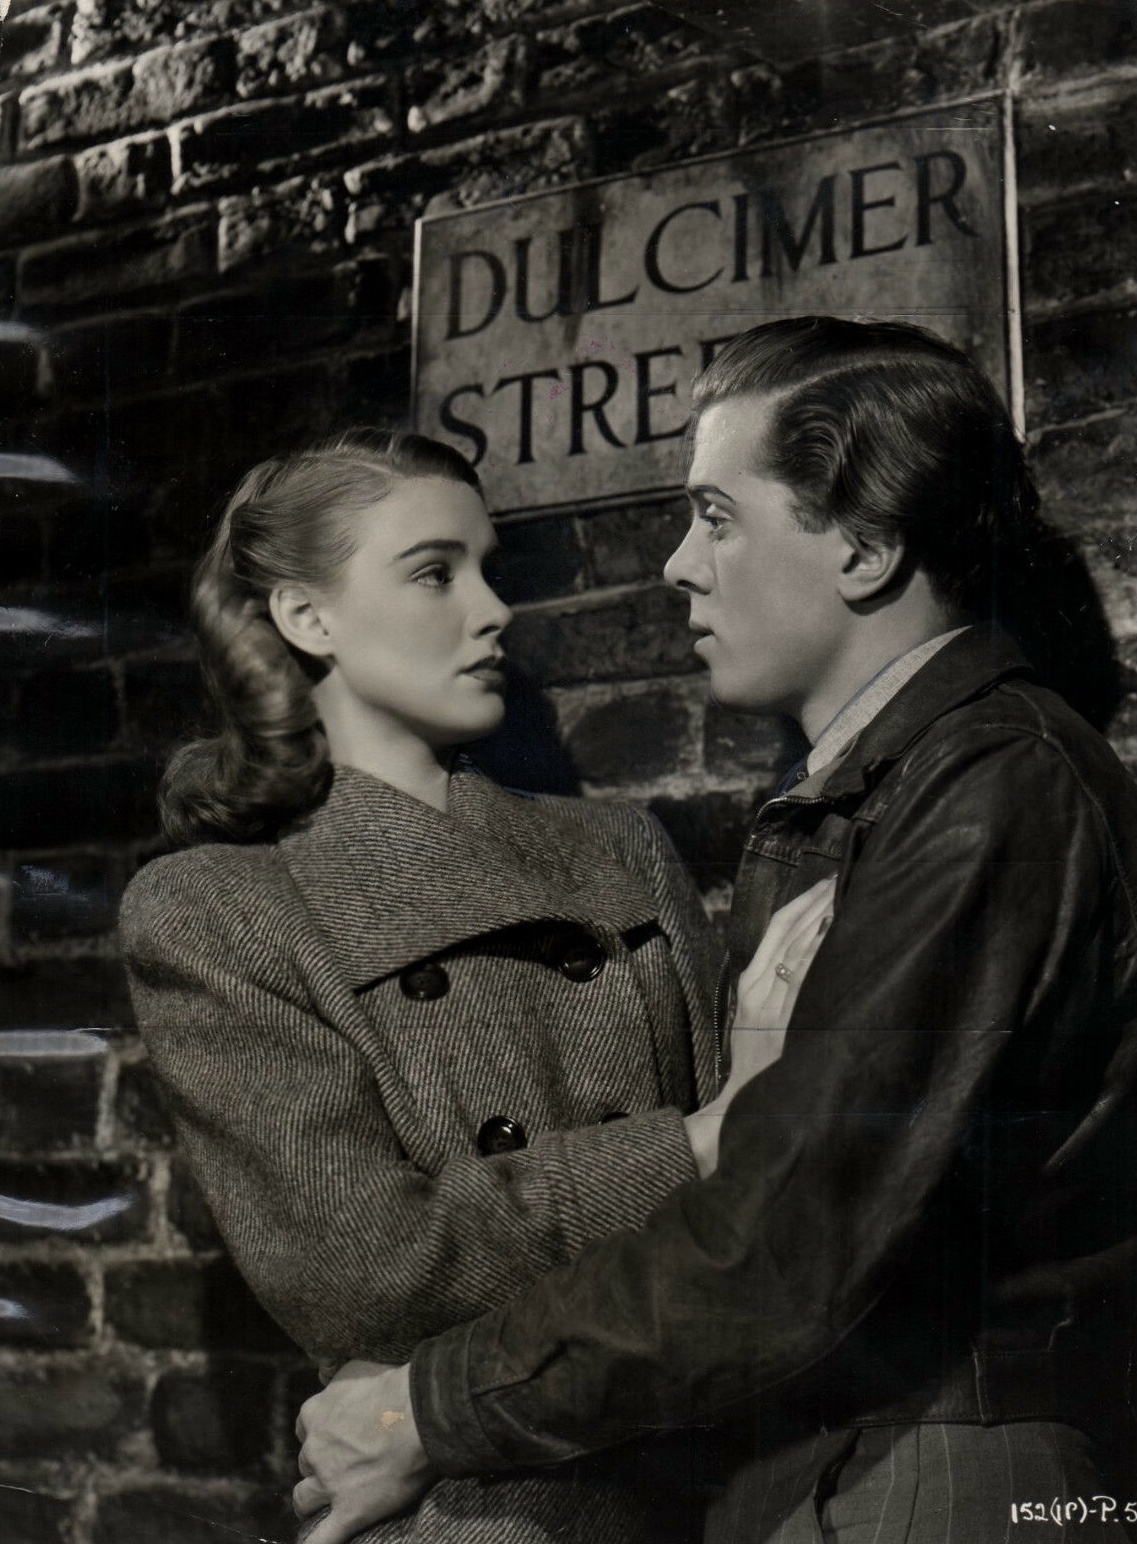 Richard Attenborough and Susan Shaw in Dulcimer Street (1948)